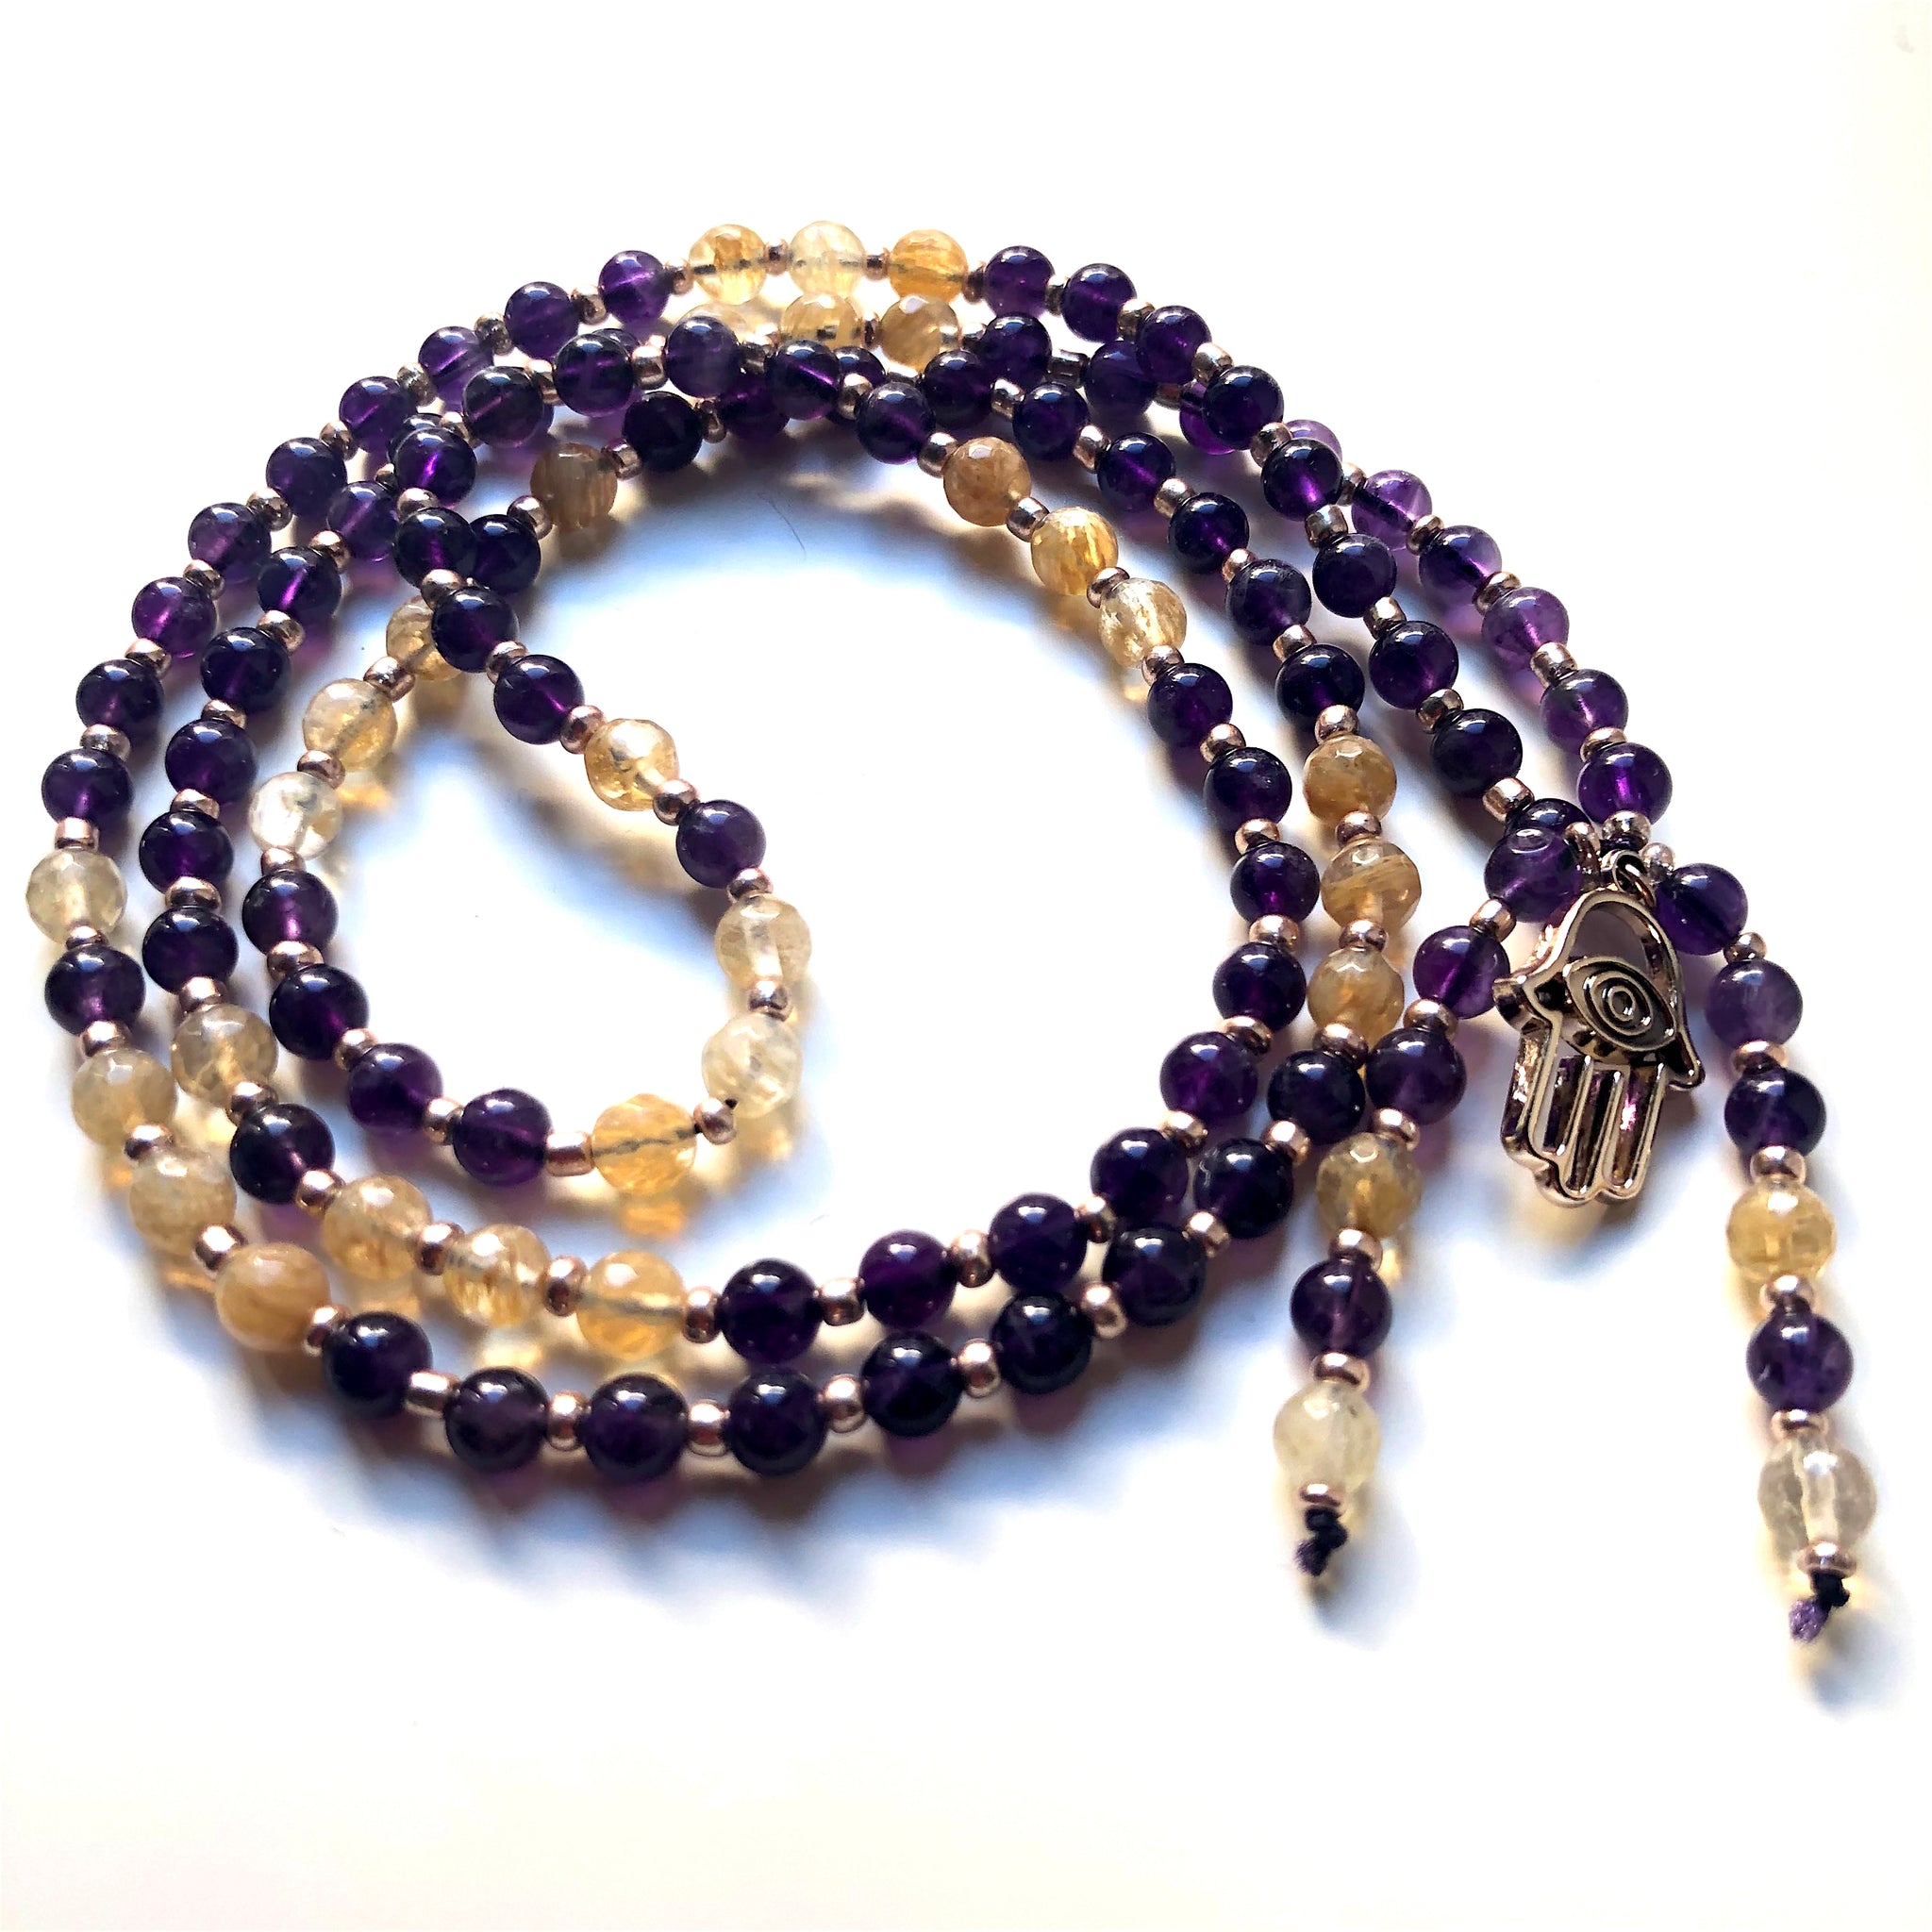 Amethyst Mala Beads, Yoga Jewelry, 108 Mala, Citrine Mala Necklace, Meditation Beads